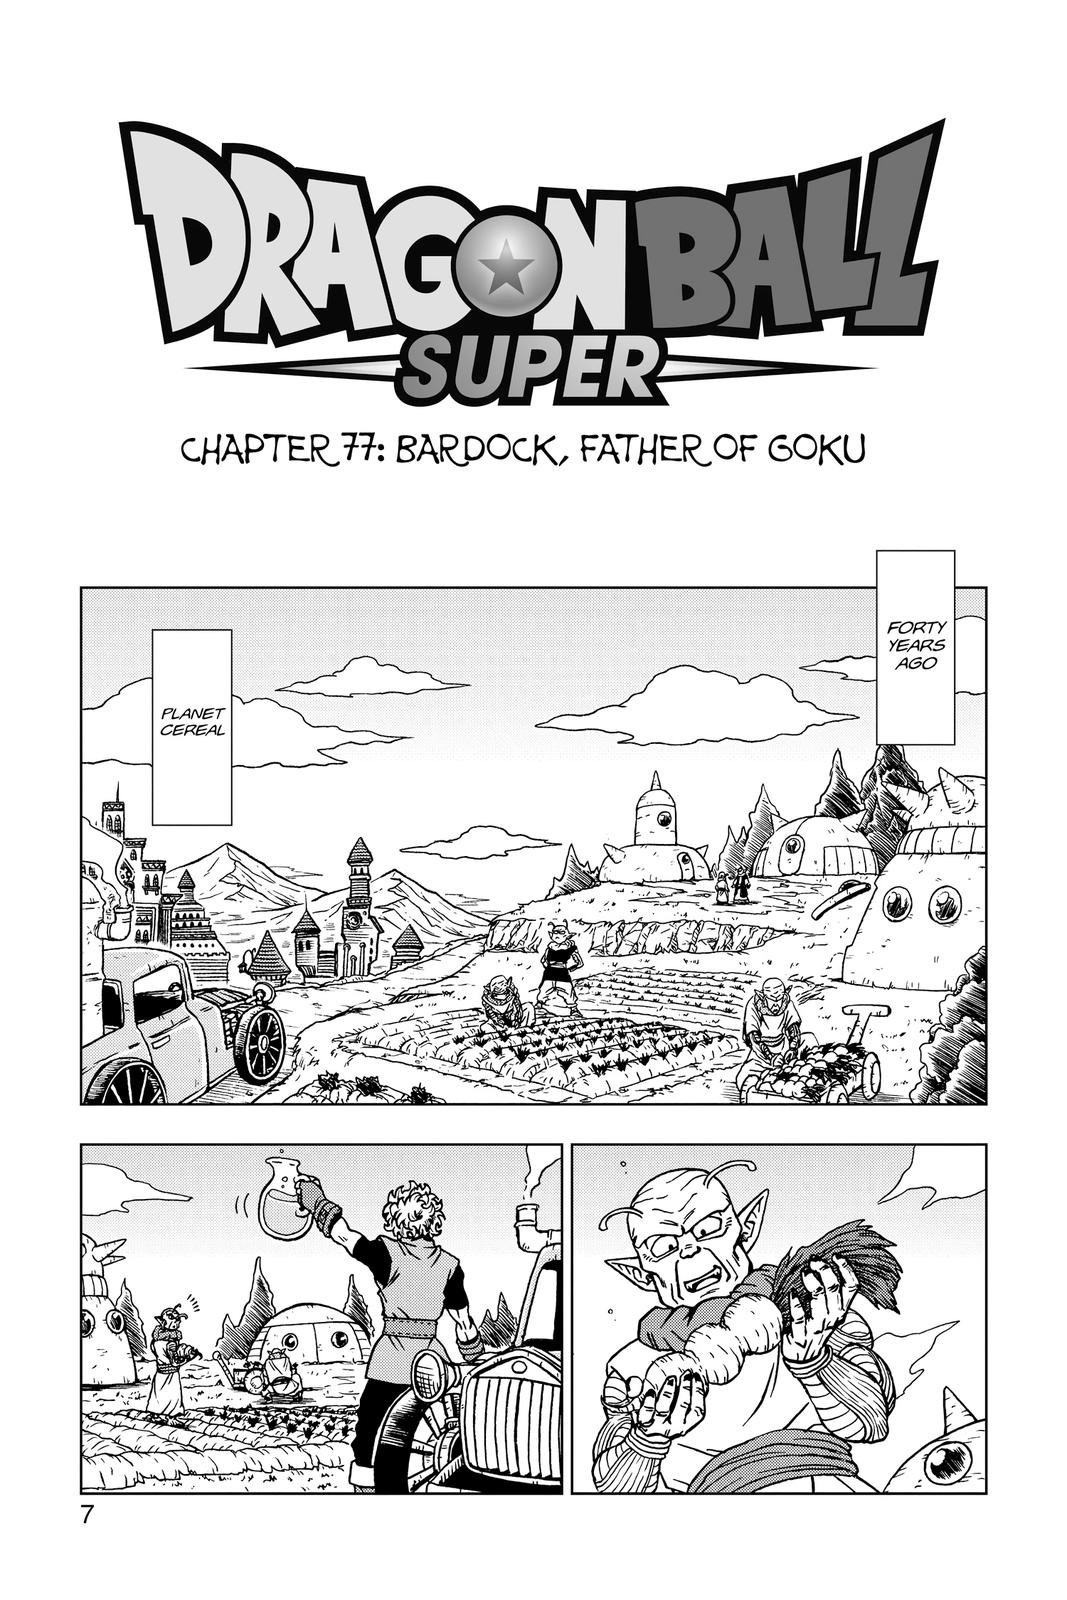 Bardock  Dragon ball super manga, Dragon ball z, Dragon ball super